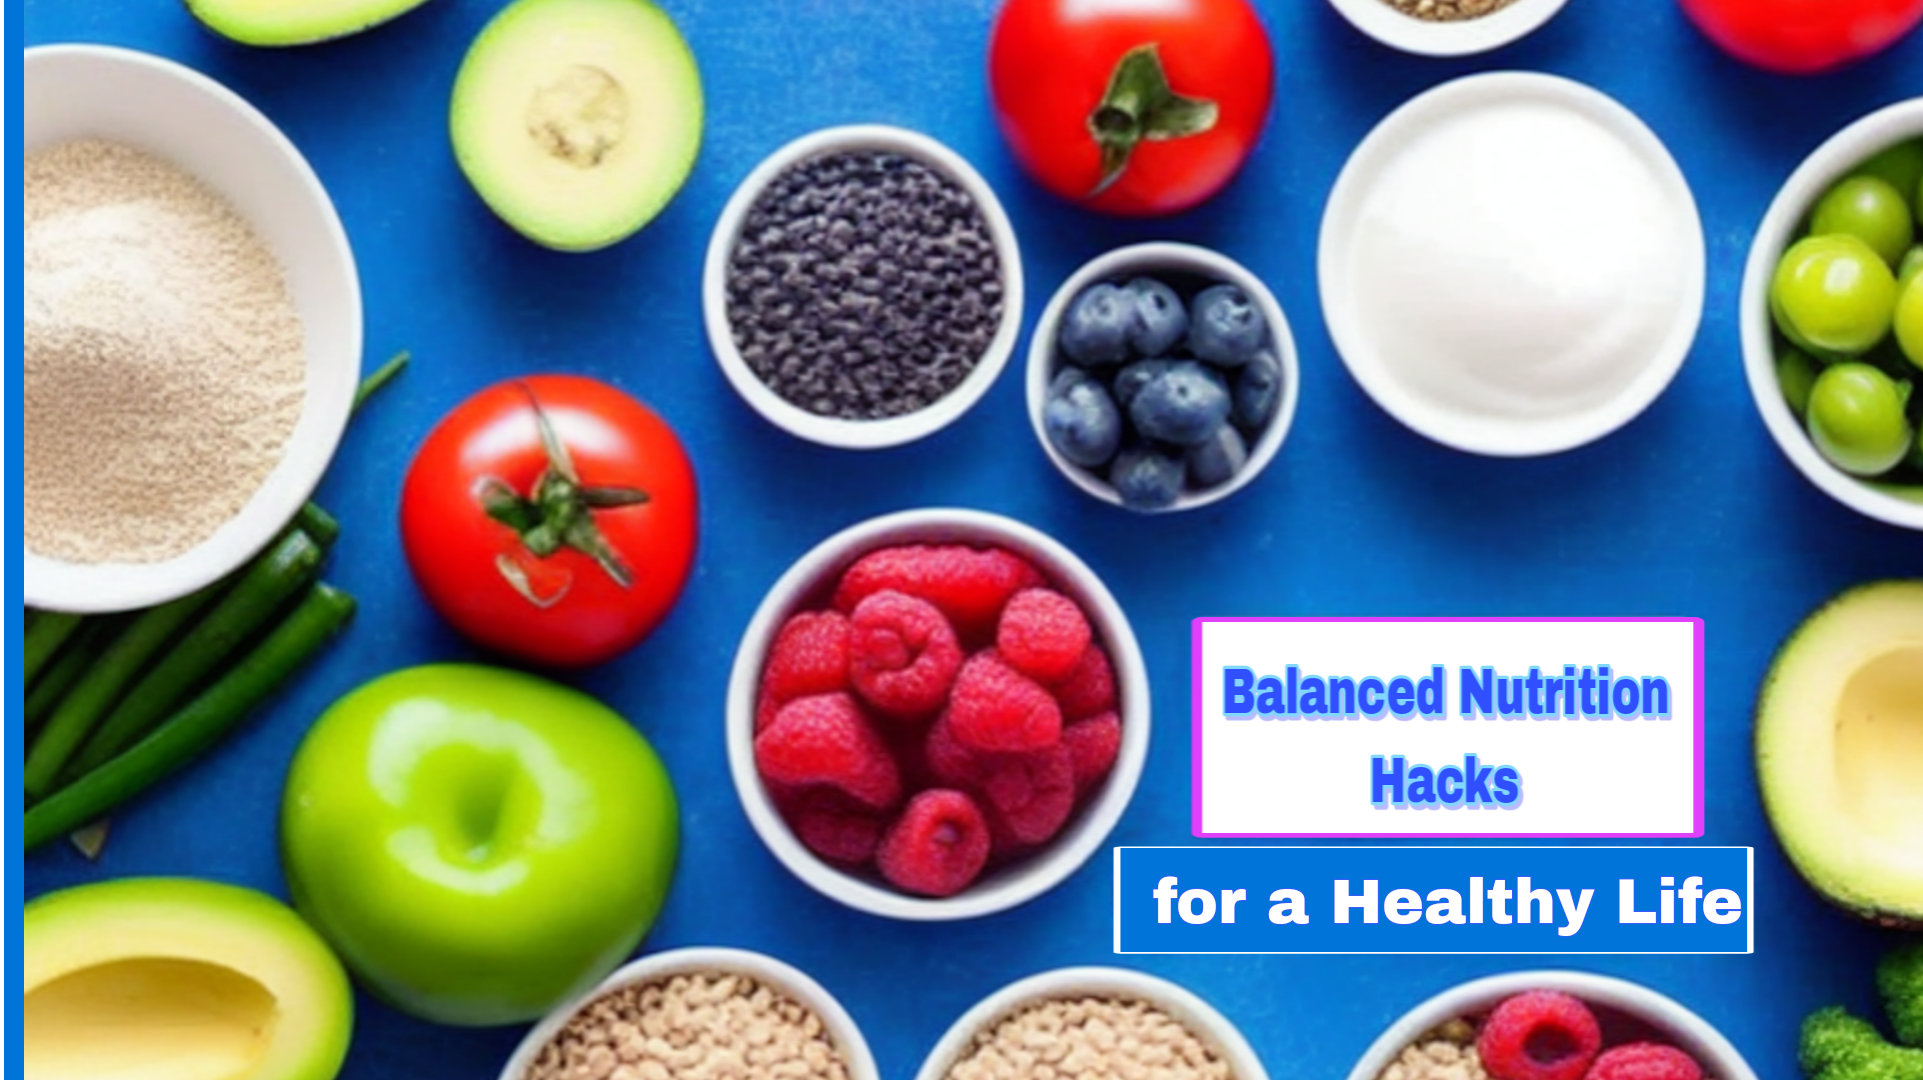 Balanced Nutrition Hacks for a Healthy Life